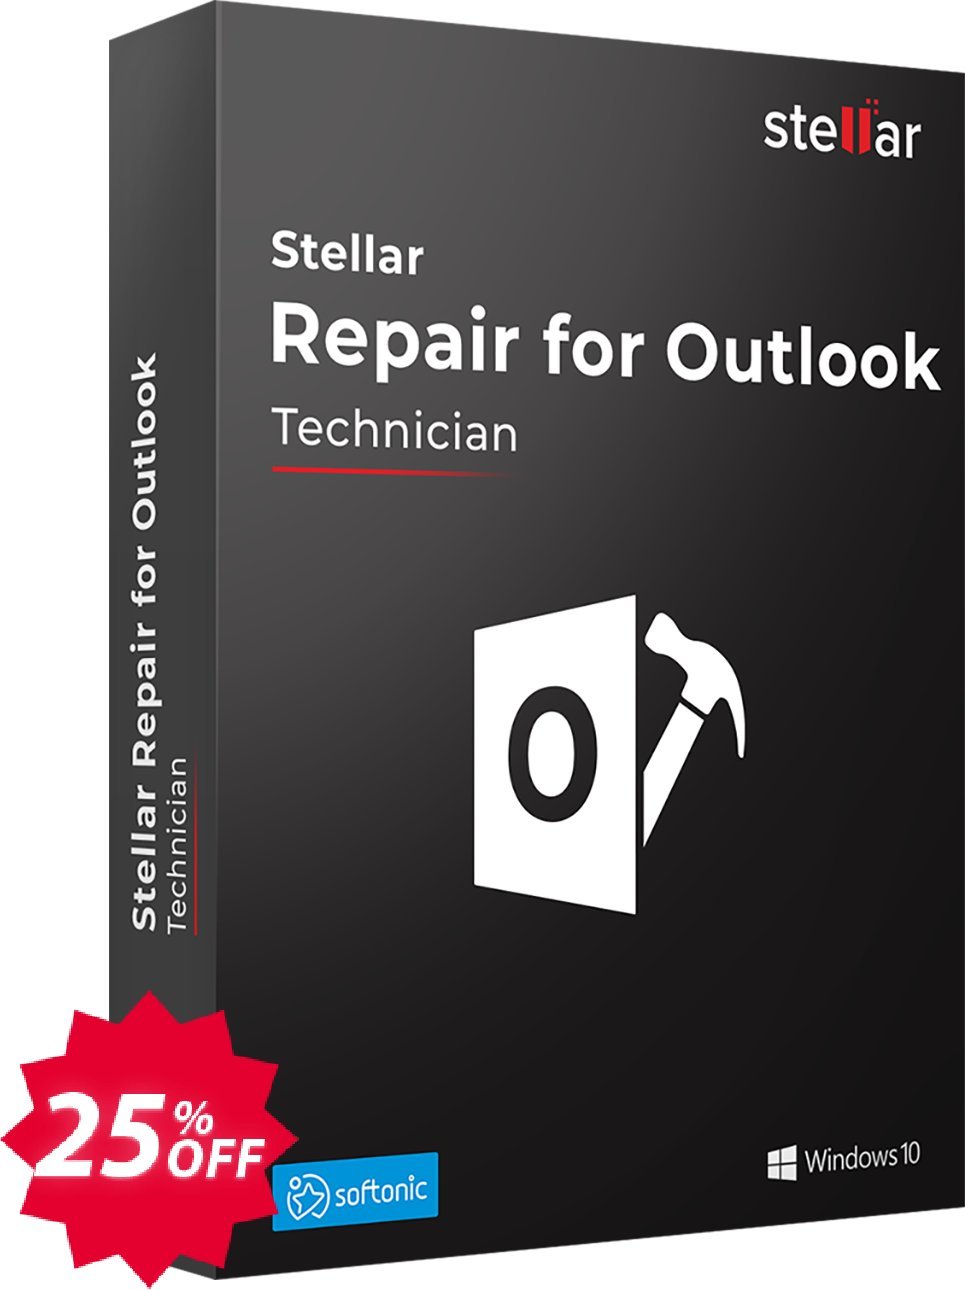 Stellar Repair for Outlook Technician Lifetime Coupon code 25% discount 